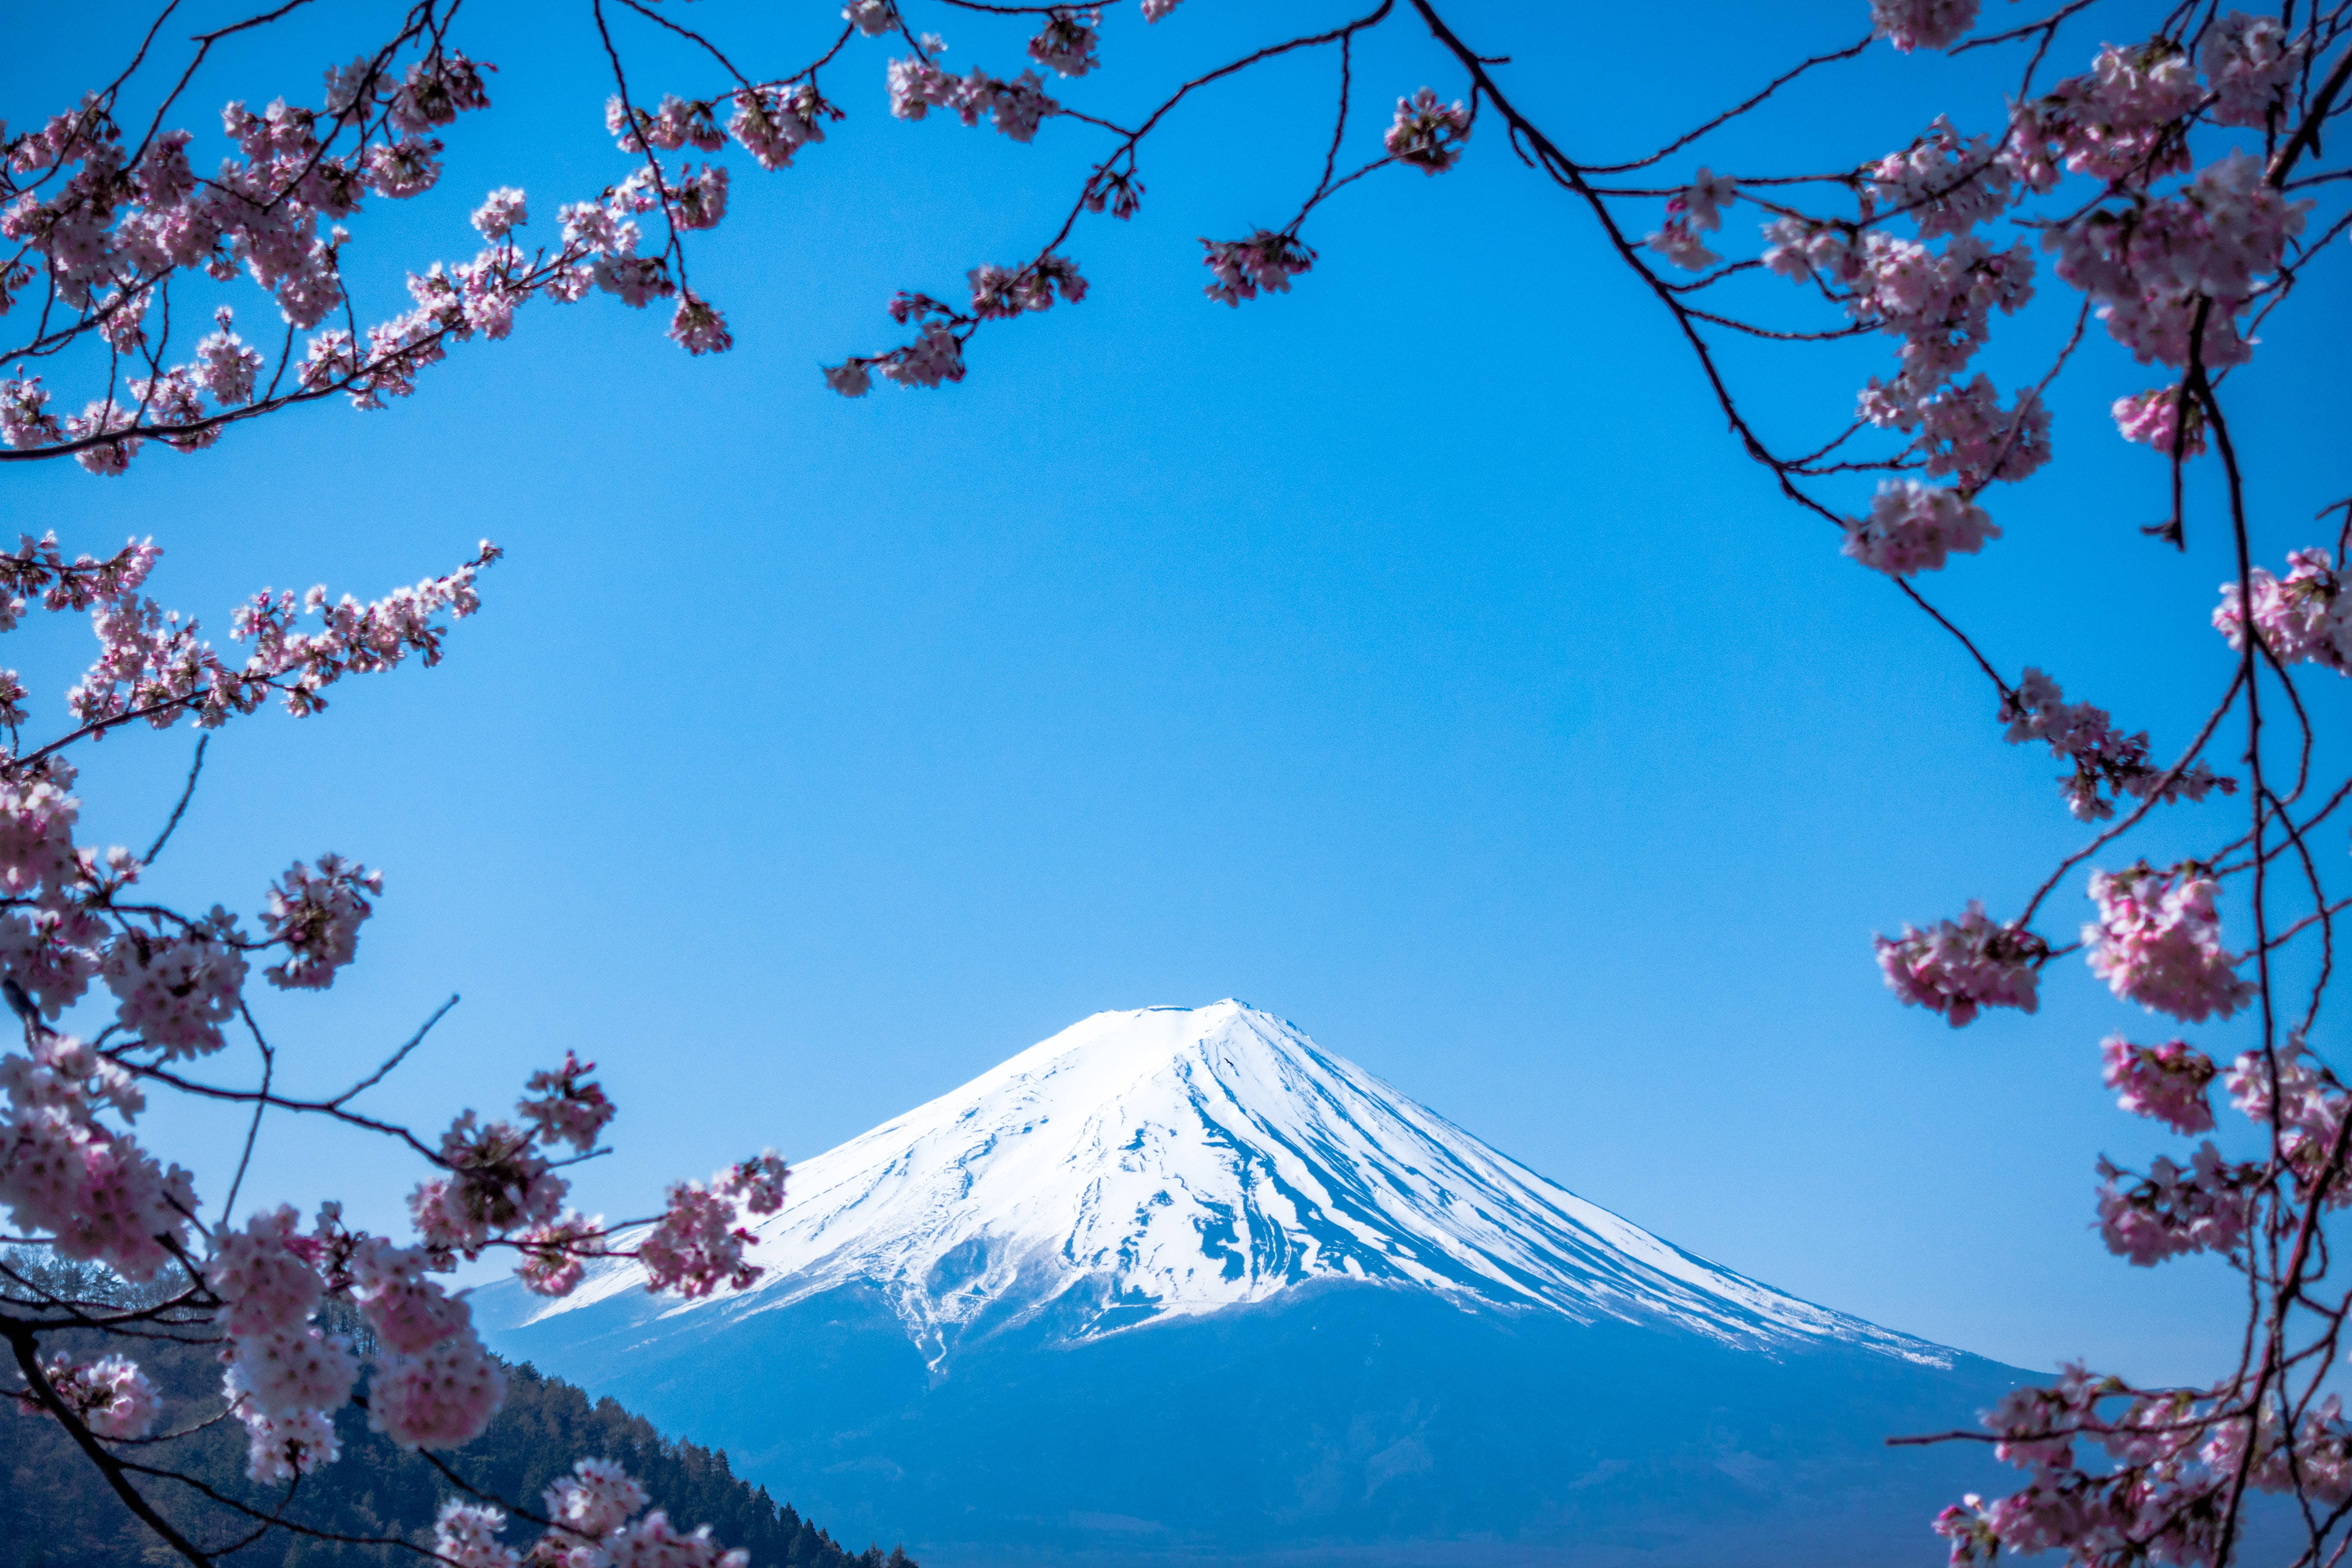 Japanese Hd Mount Fuji And Sakura Blossoms Picture